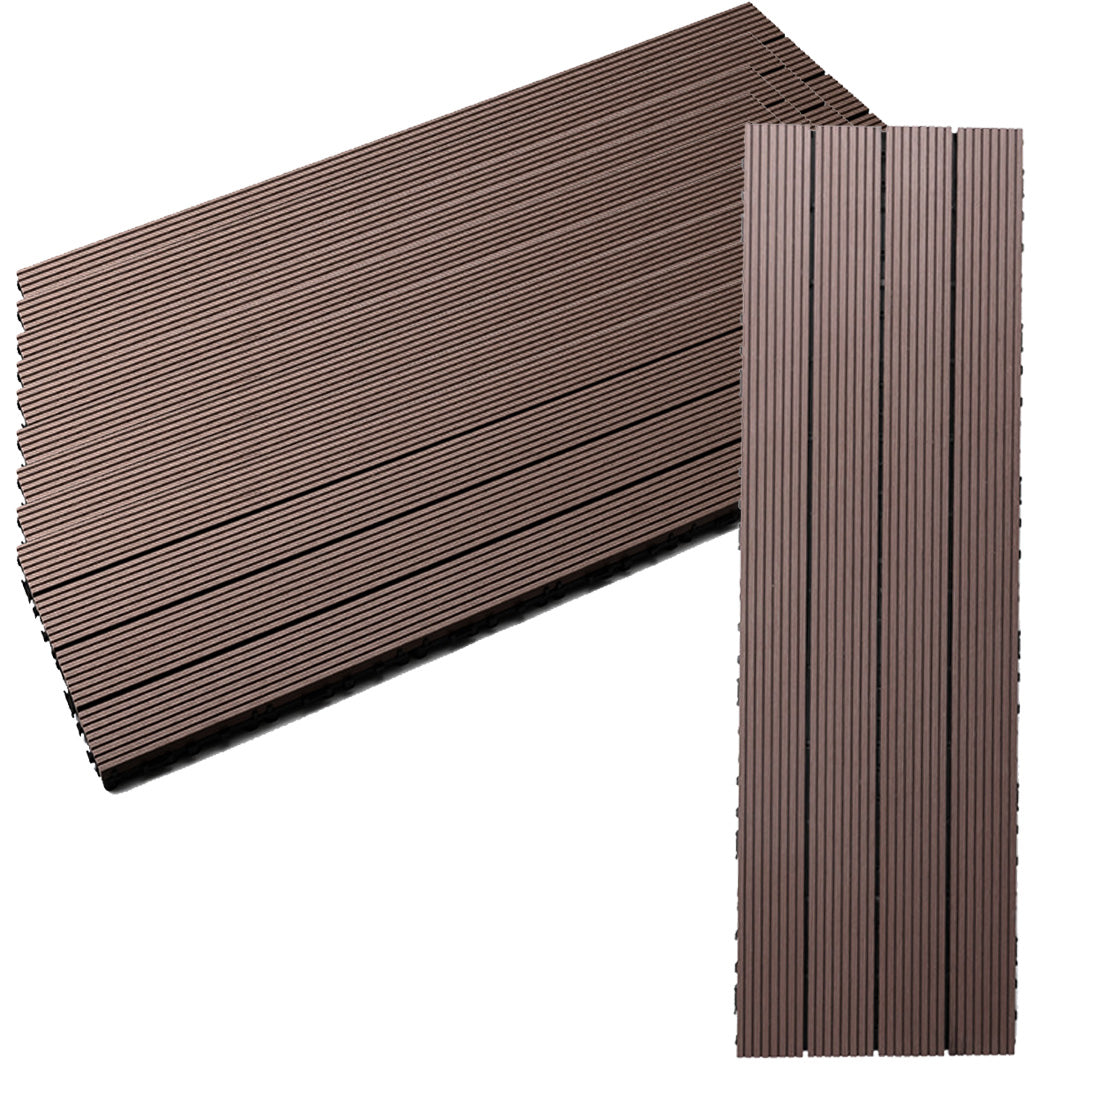 12''x 36'' Interlocking Composite Deck Tiles - Brown (Pack of 5)